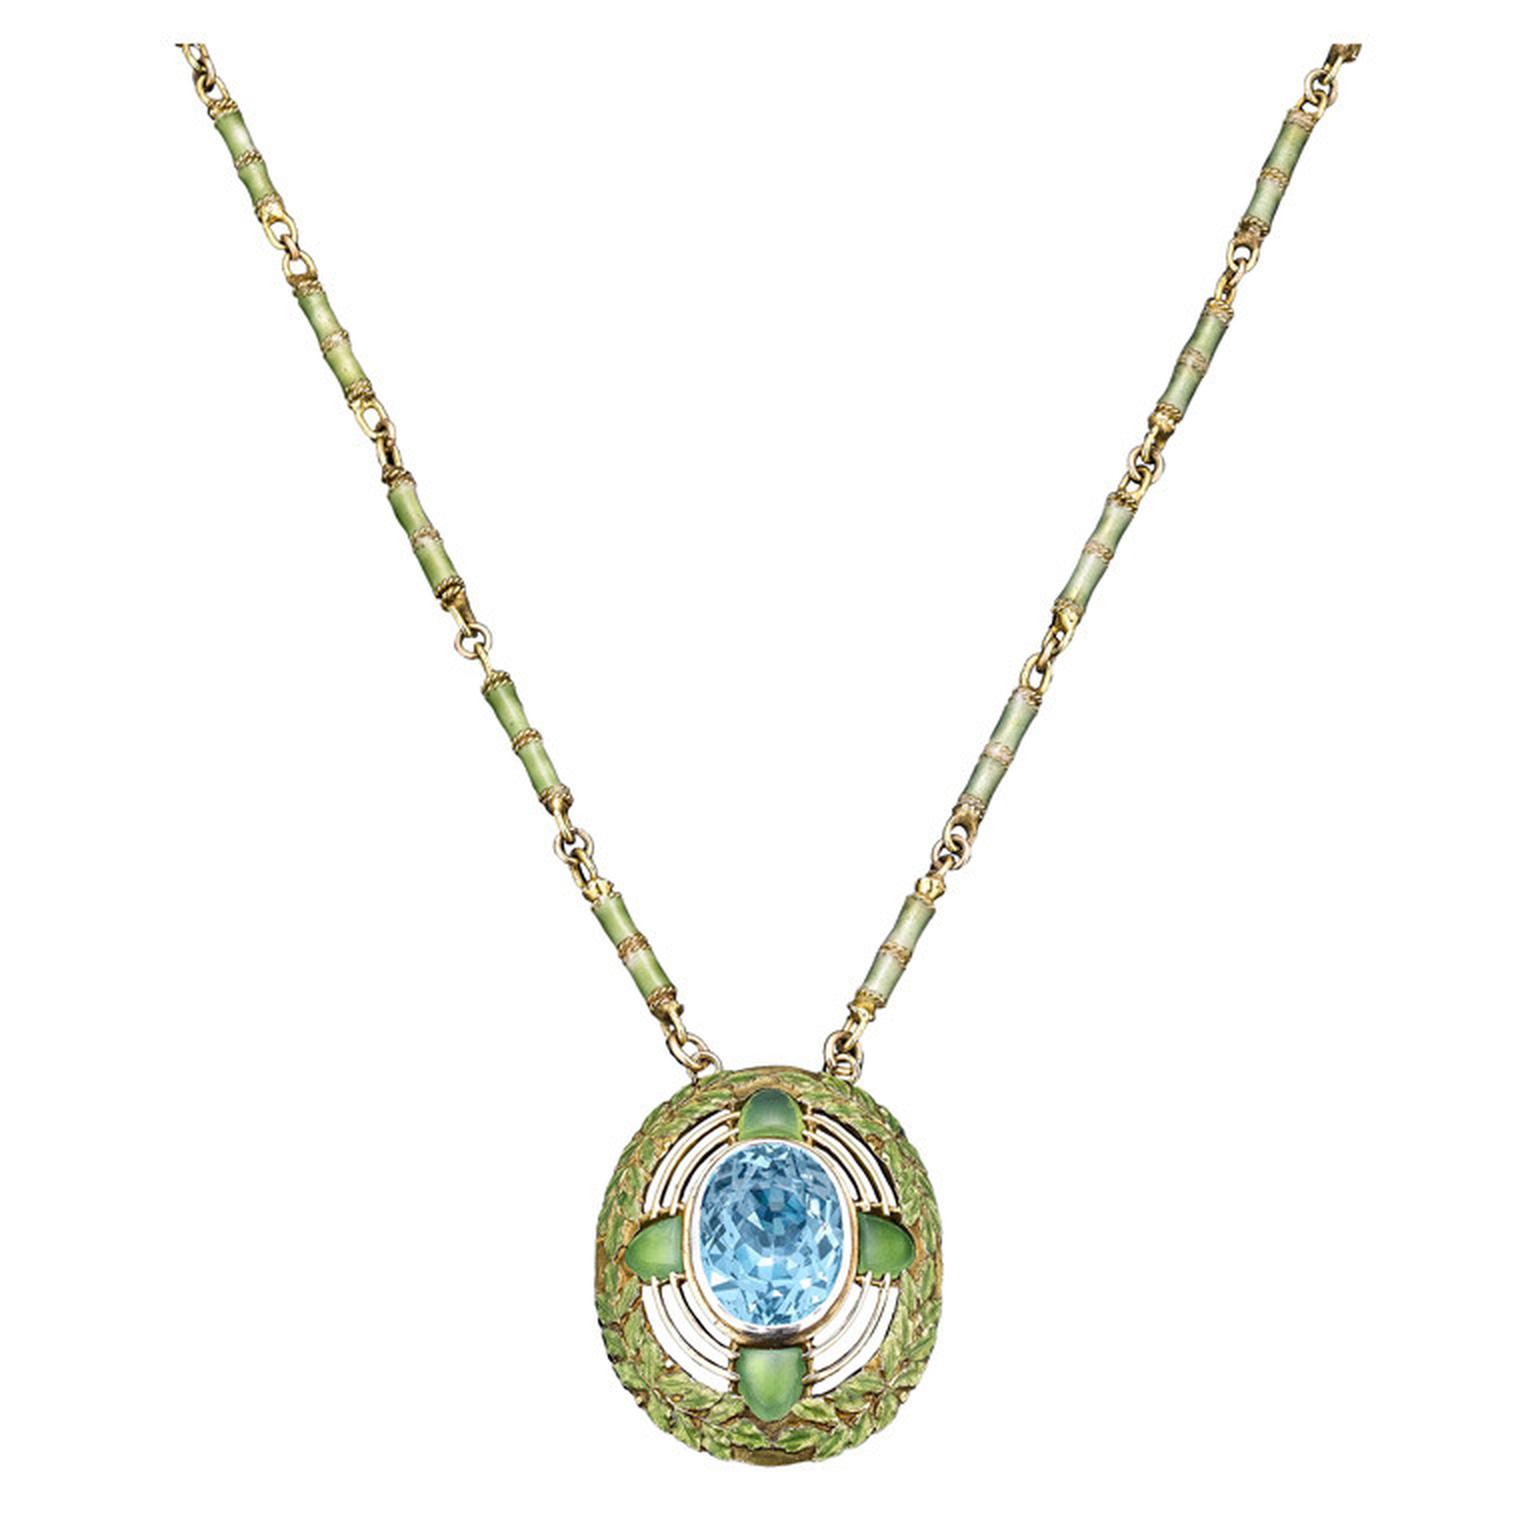 Tiffany & Co. Art Nouveau aquamarine necklace with green enamel detail, circa 1900.